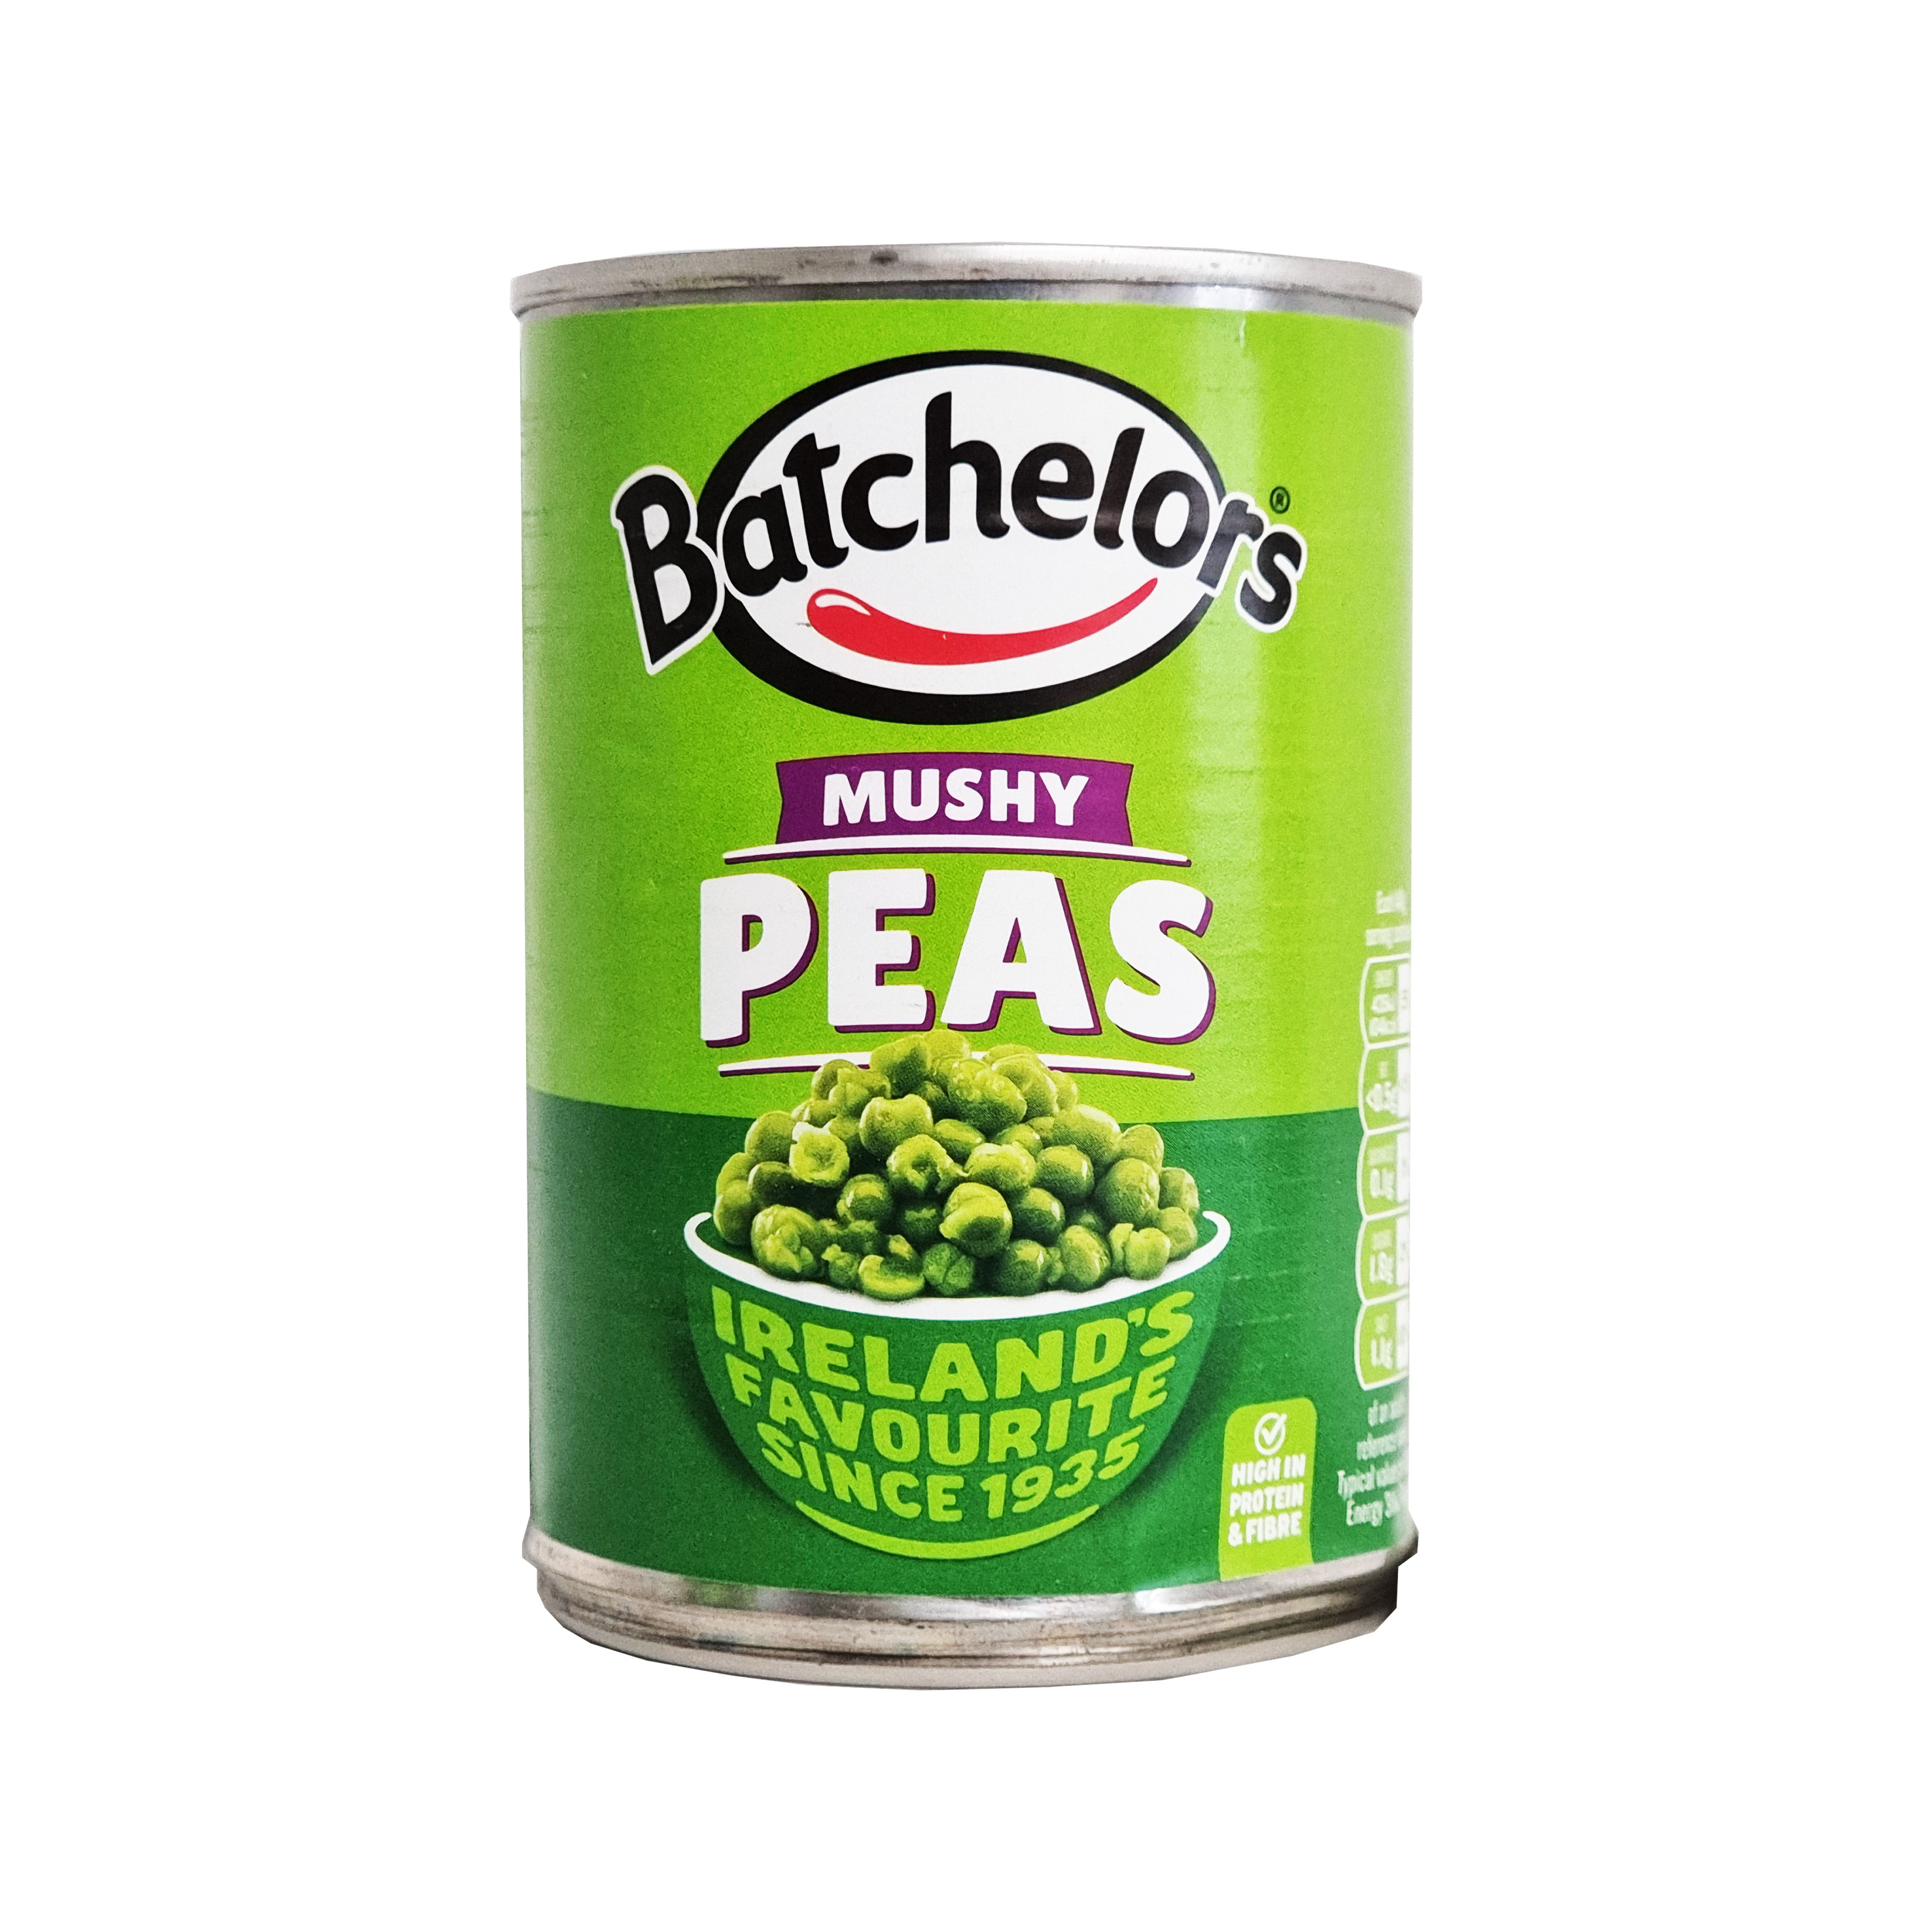 Batchelors mushy peas 420g